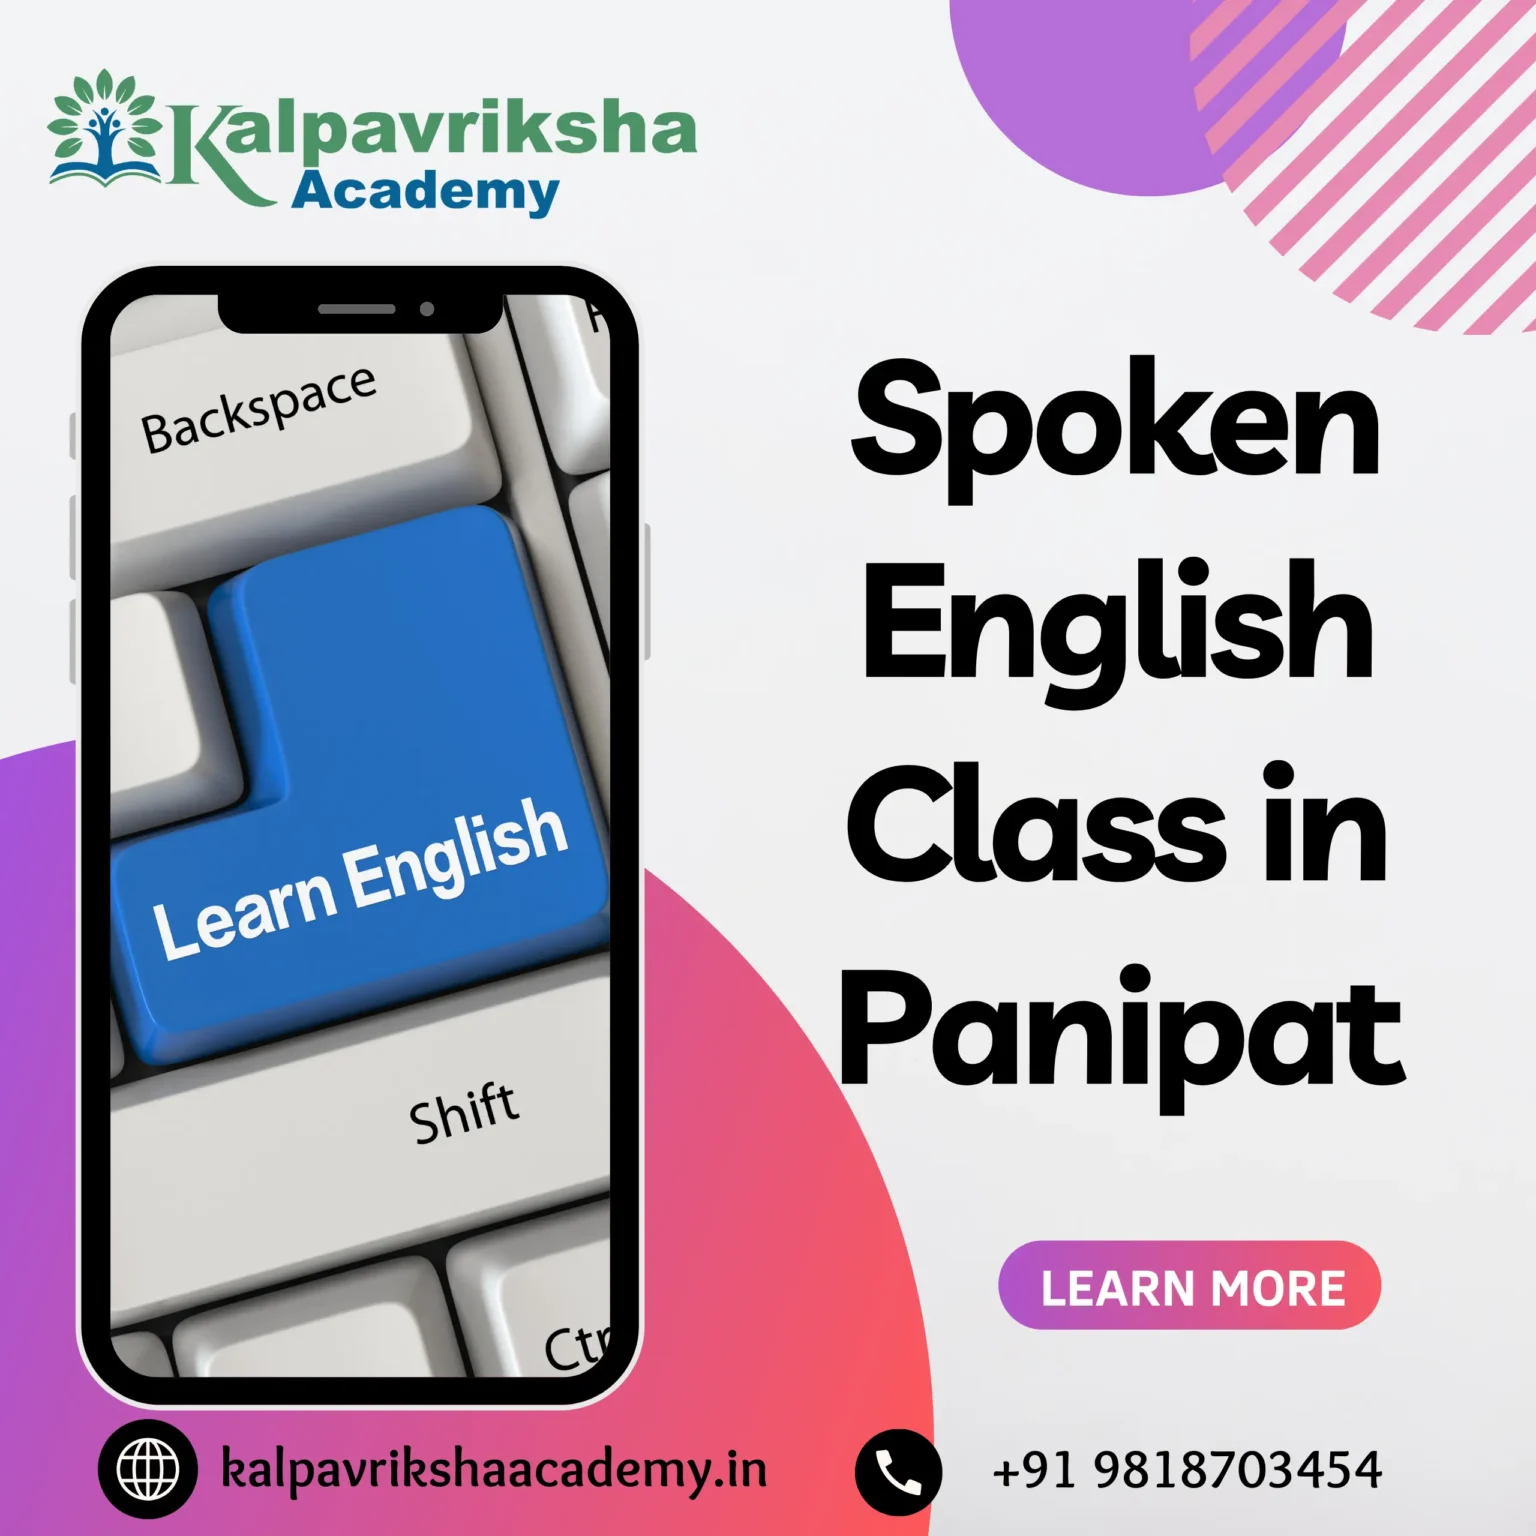 Spoken English Class in Panipat - Kalpavriksha Academy